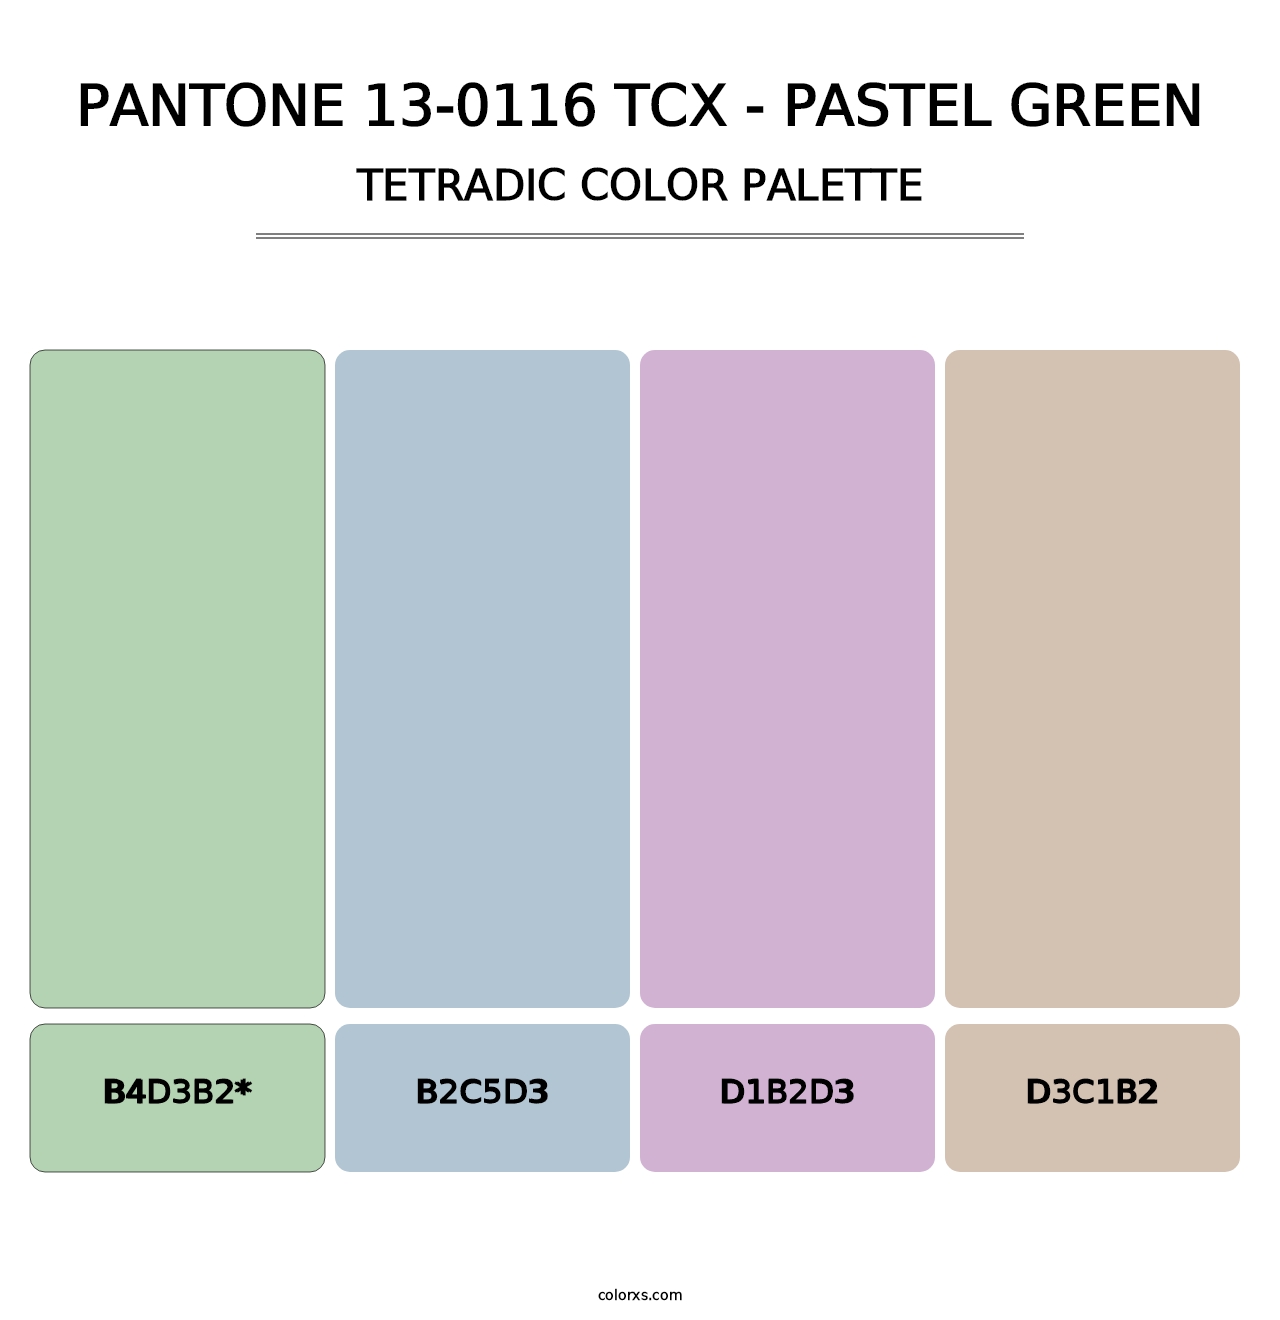 PANTONE 13-0116 TCX - Pastel Green - Tetradic Color Palette